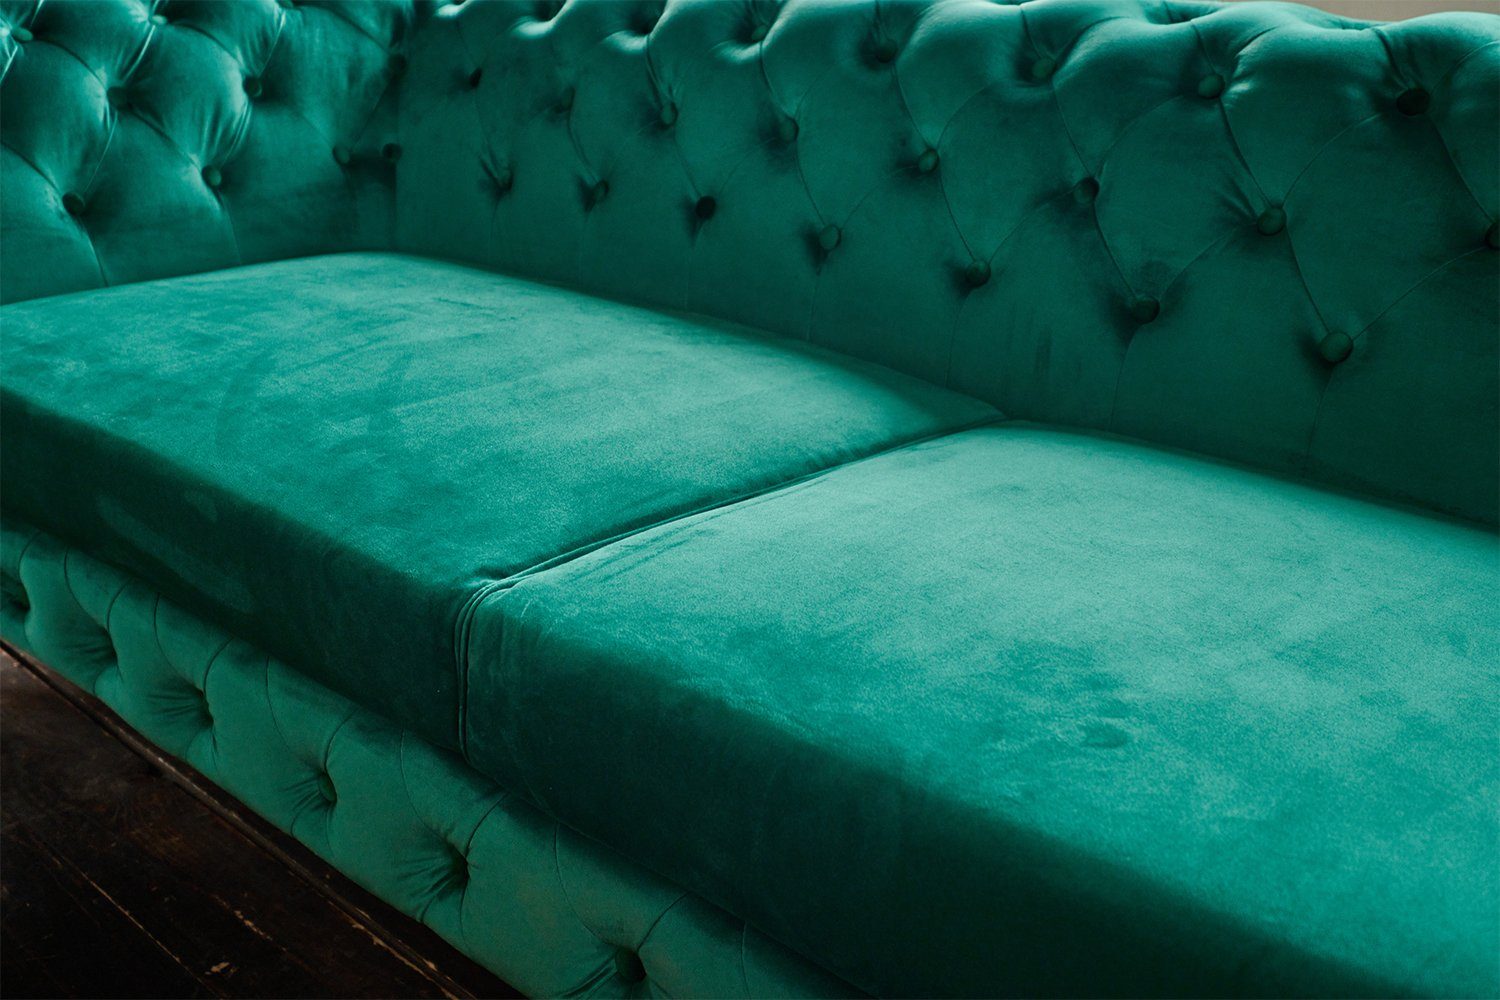 KAWOLA 3-Sitzer NARLA, Sofa Chesterfield Velvet Farben versch. grün